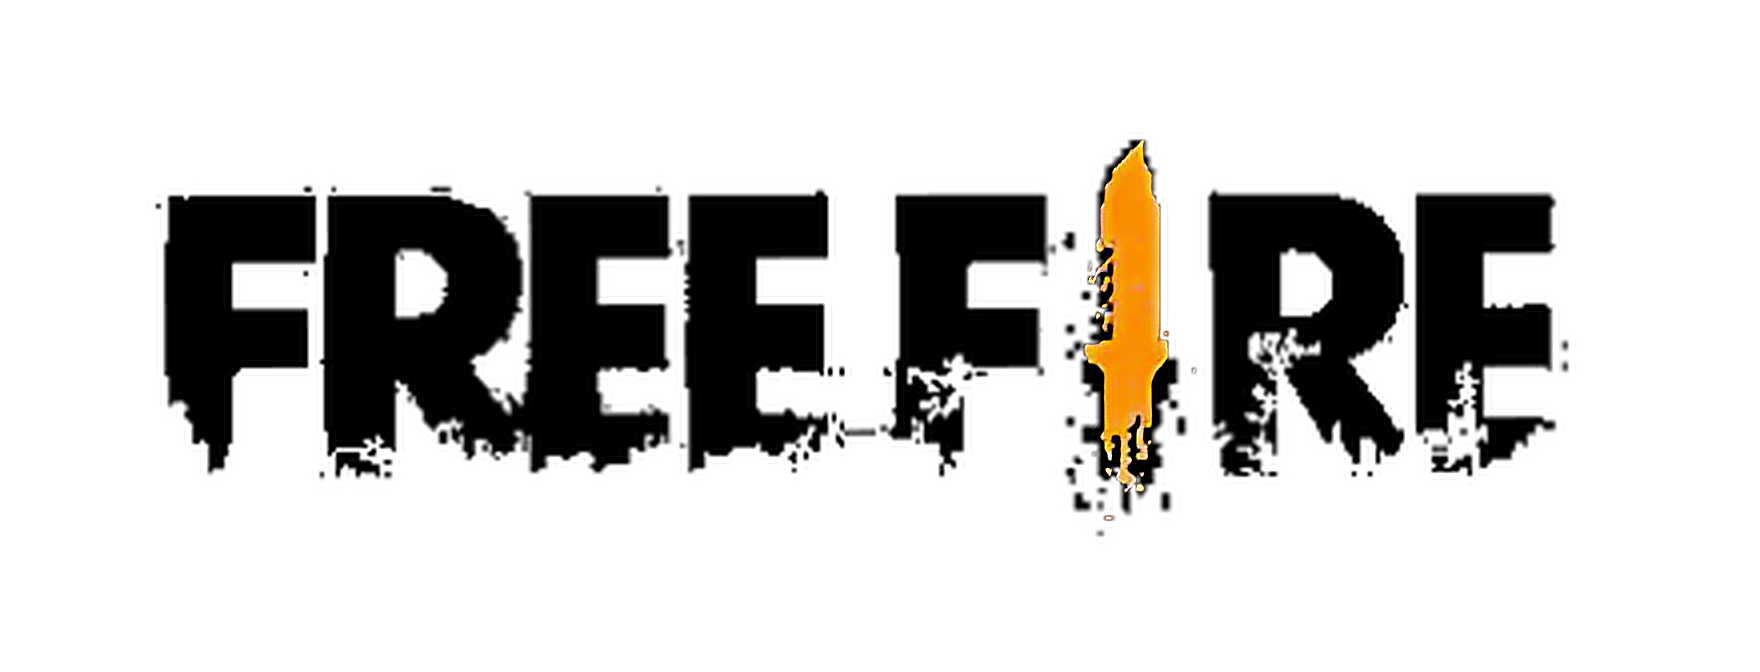 Garena Free Fire Logo Background PNG